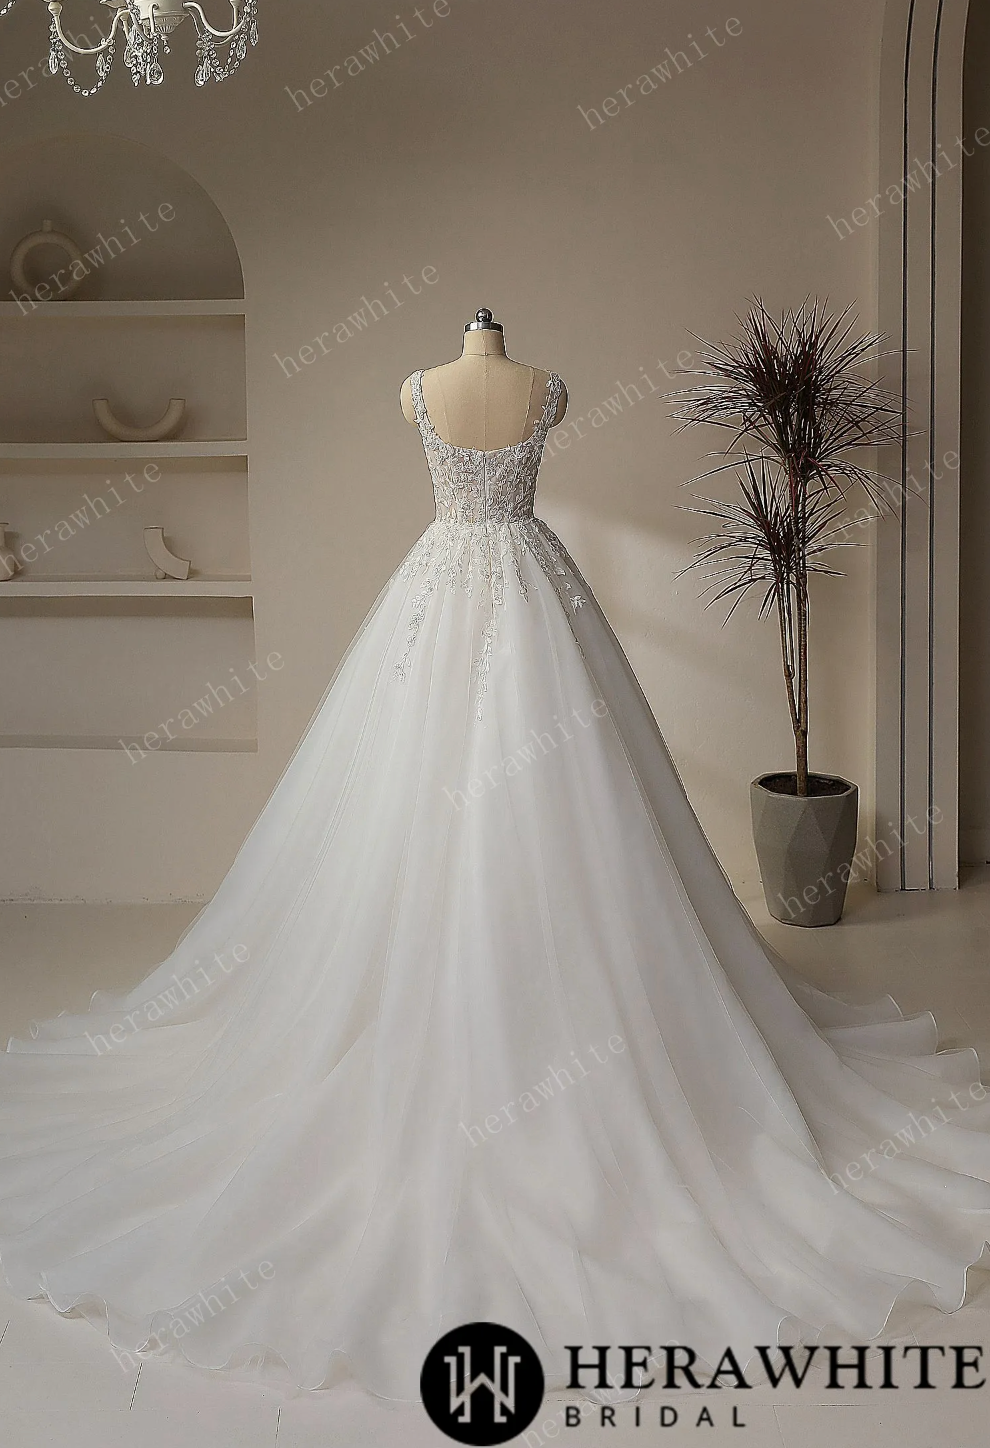 Romantic Square Collar Zipper Ball Gown Wedding Dresses